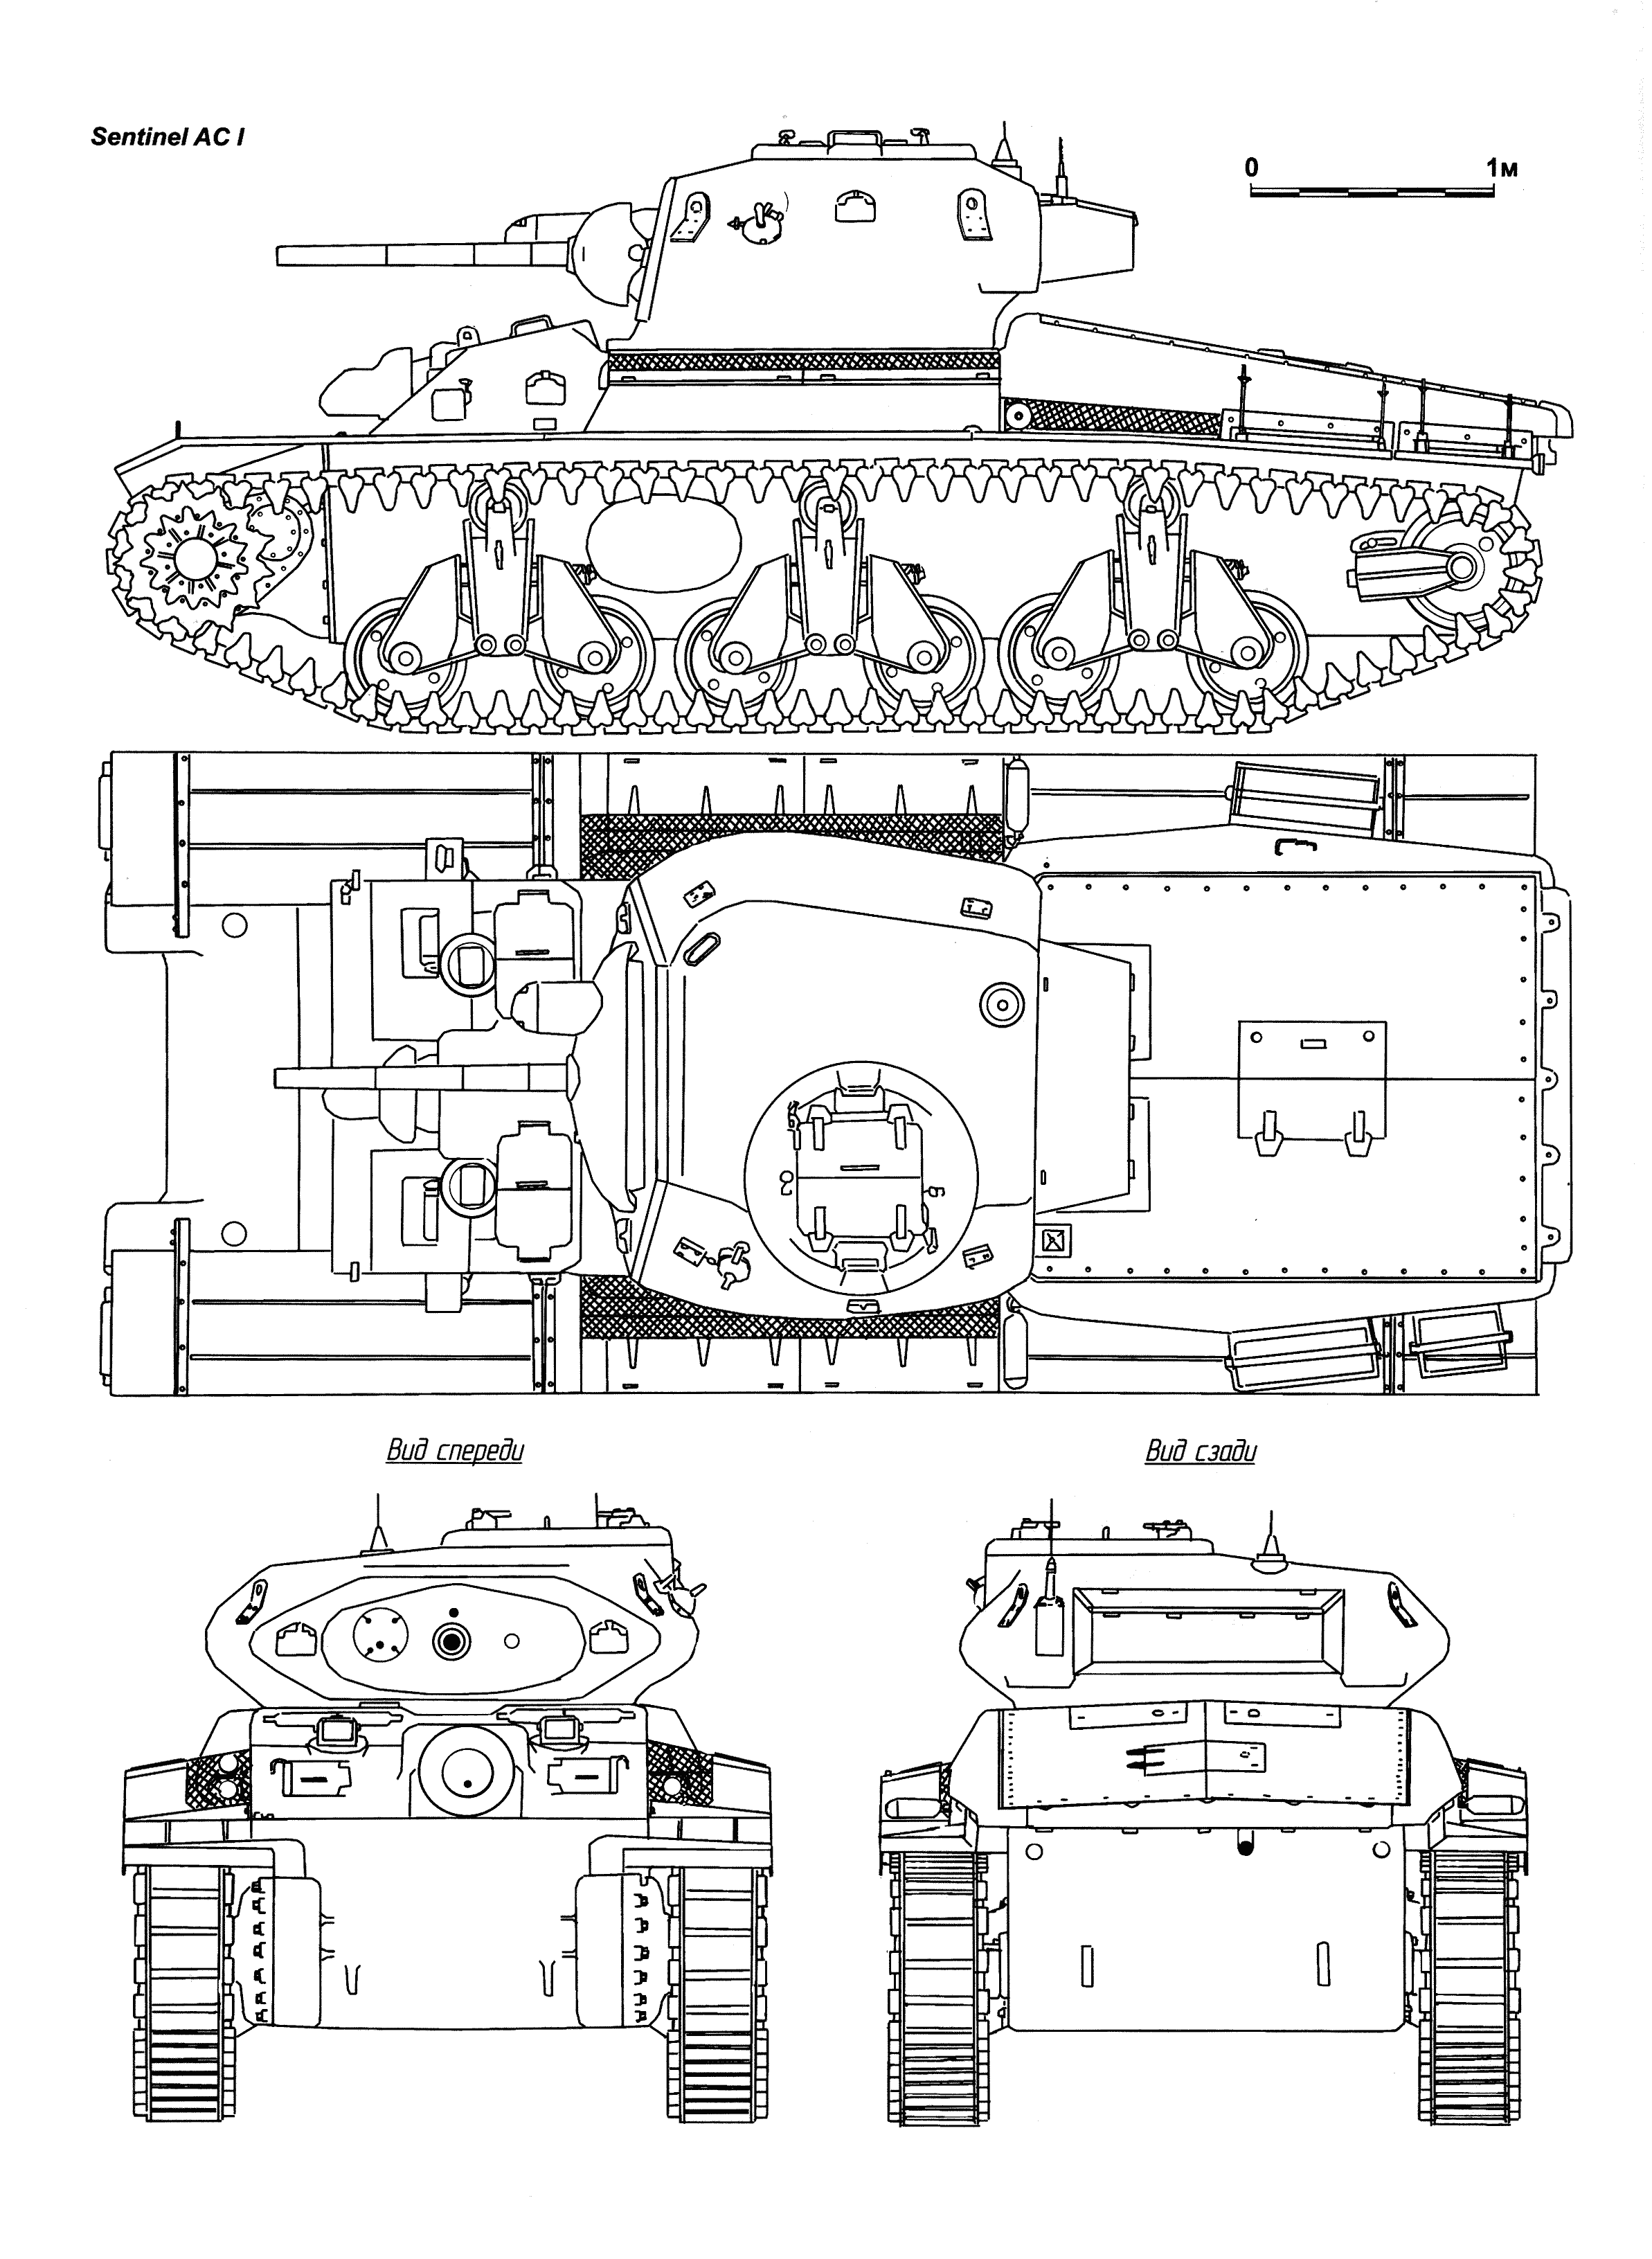 Sentinel tank blueprint